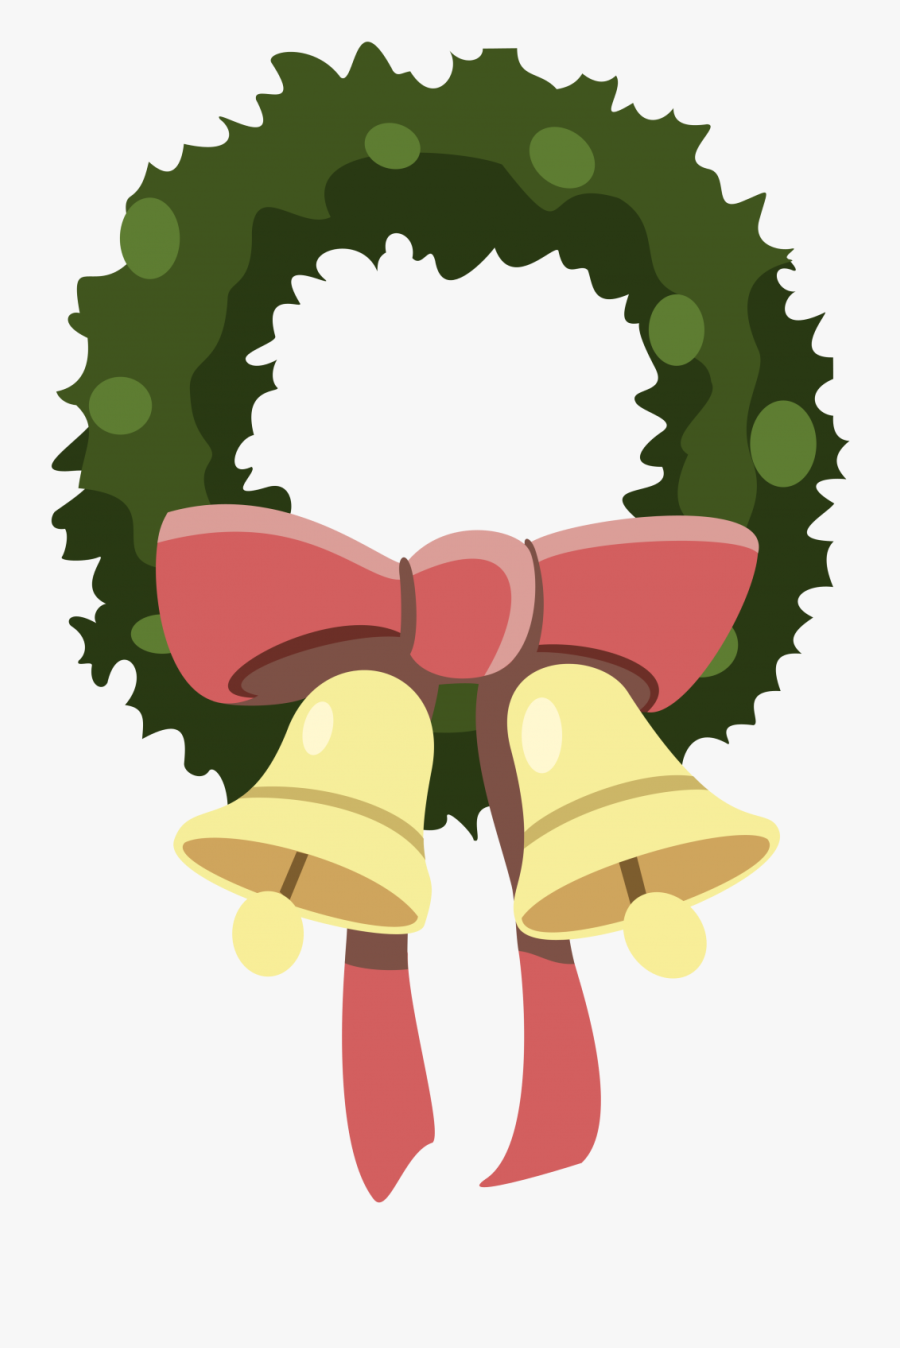 Wreath Christmas Vector Clip Art Free File - Vector Christmas Wreath Png Free, Transparent Clipart